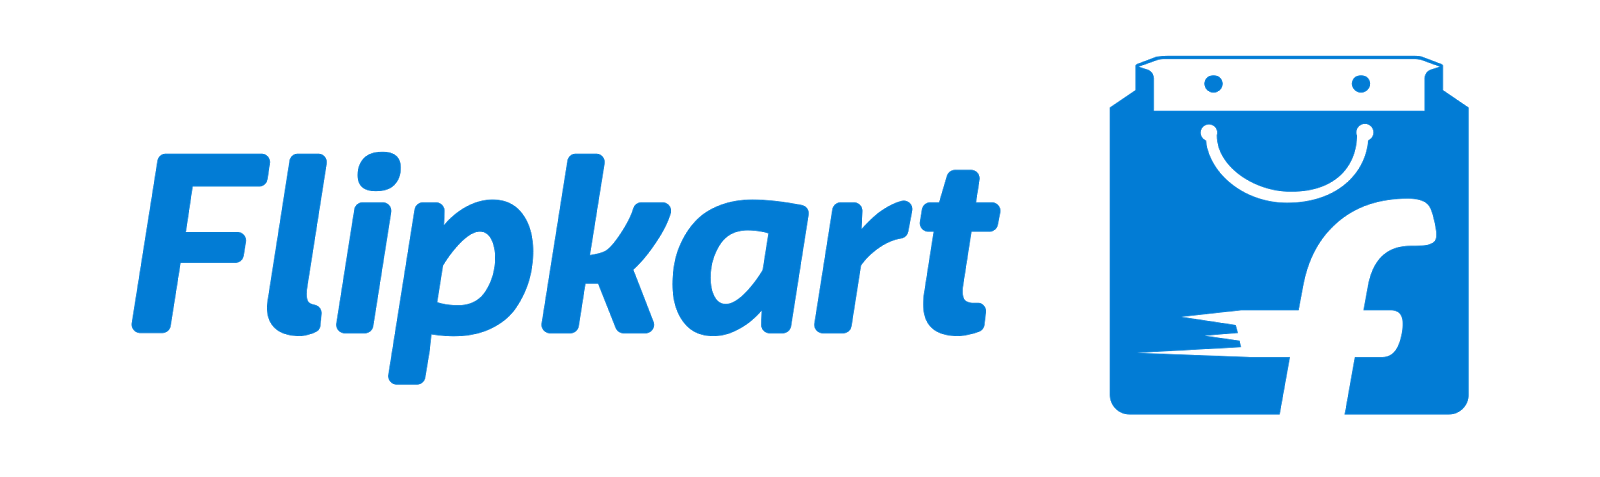 Logo Flipkart PNG - 110961